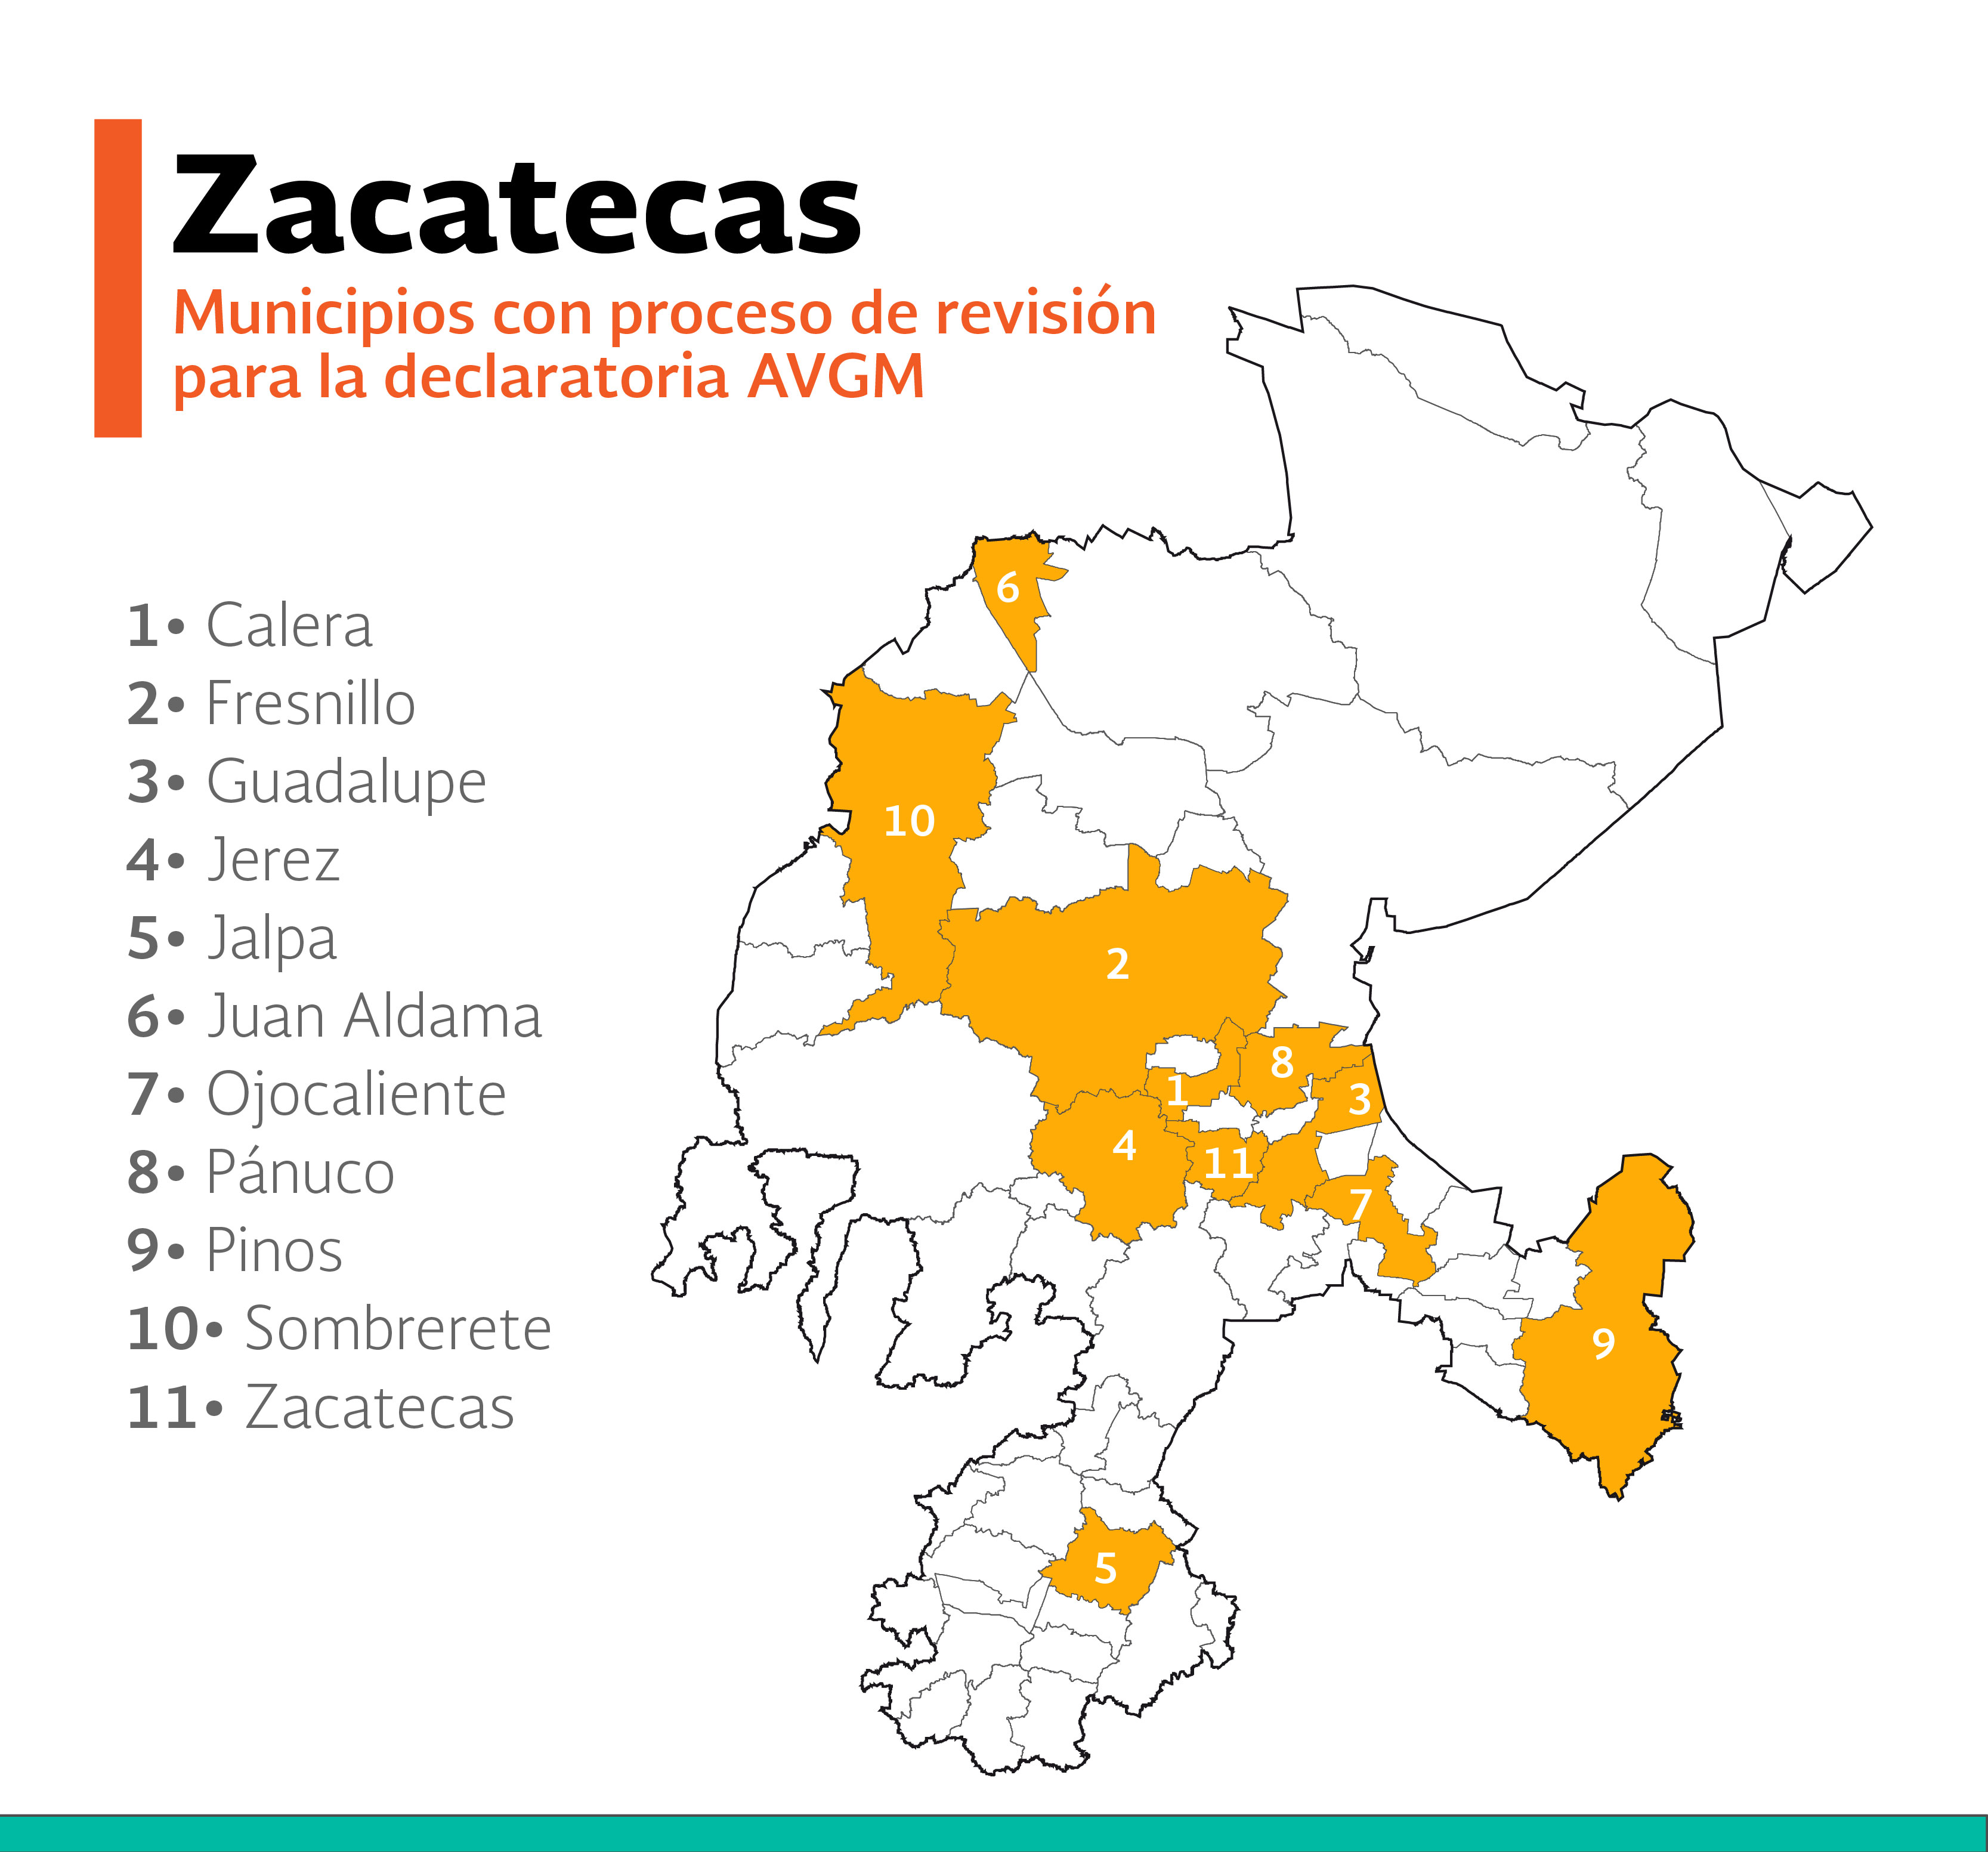 /cms/uploads/image/file/405010/Mapa_Zacatecas-27.jpg